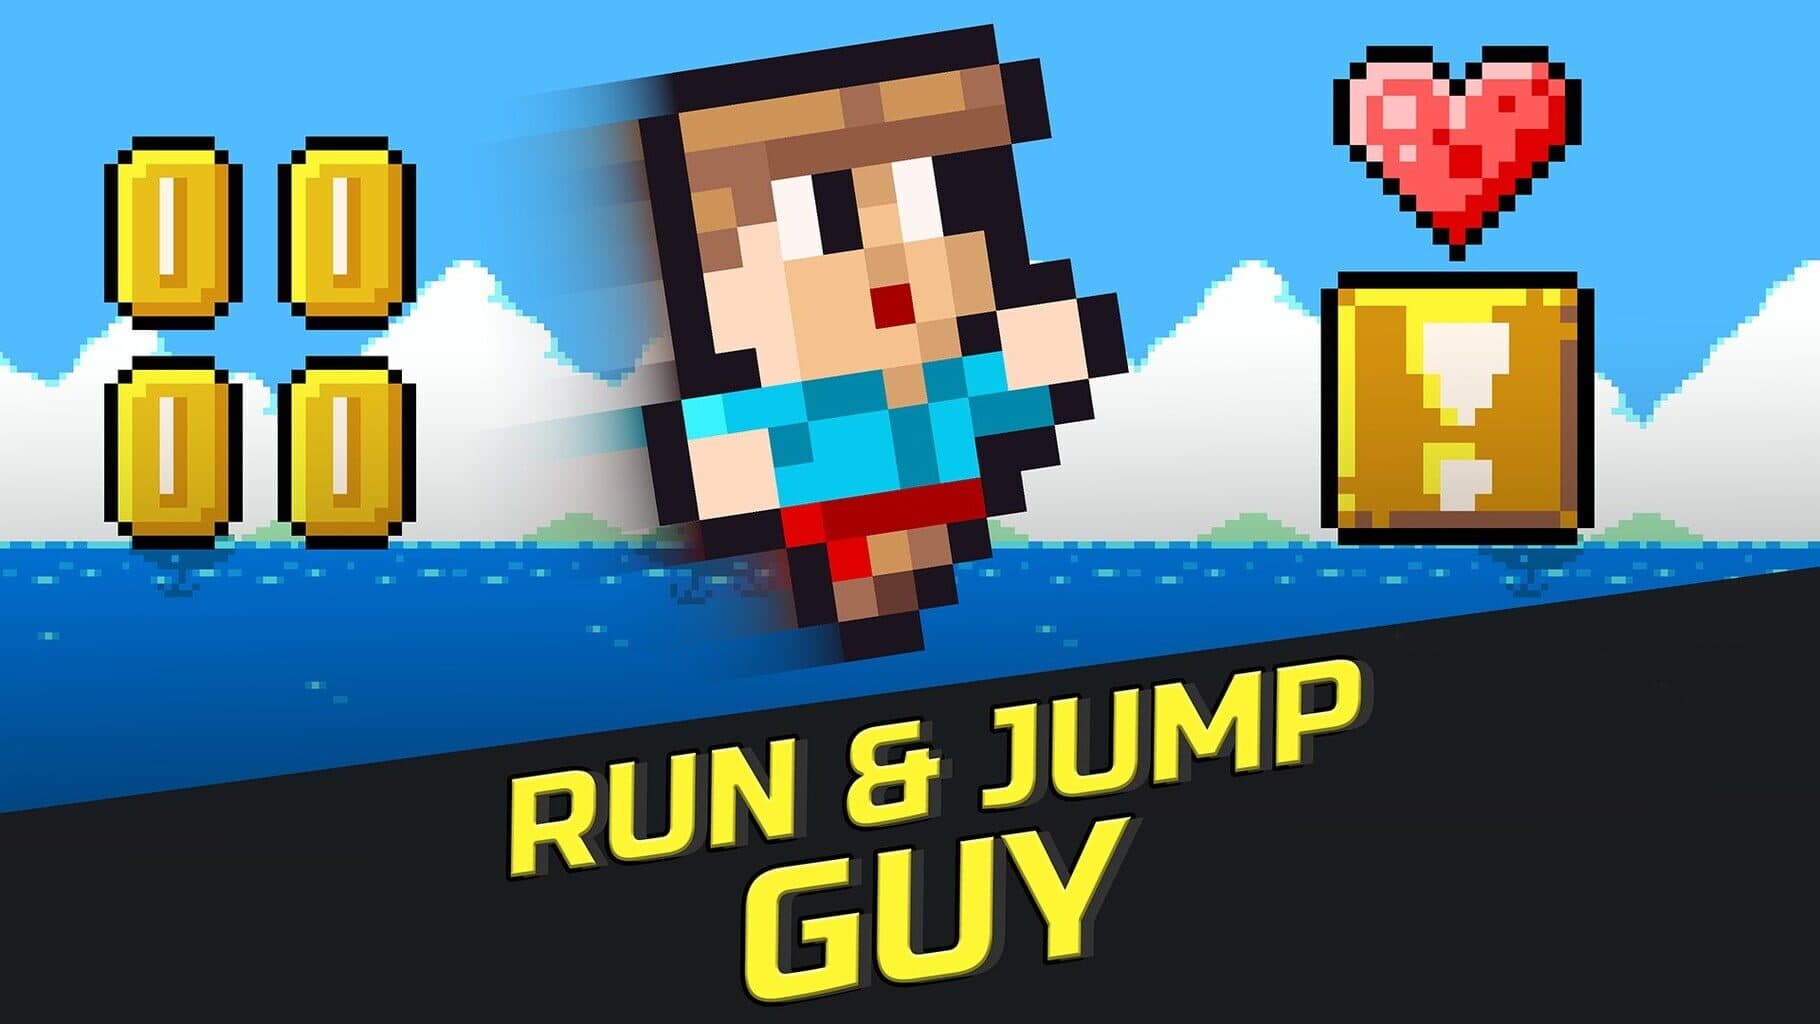 Run & Jump Guy Image